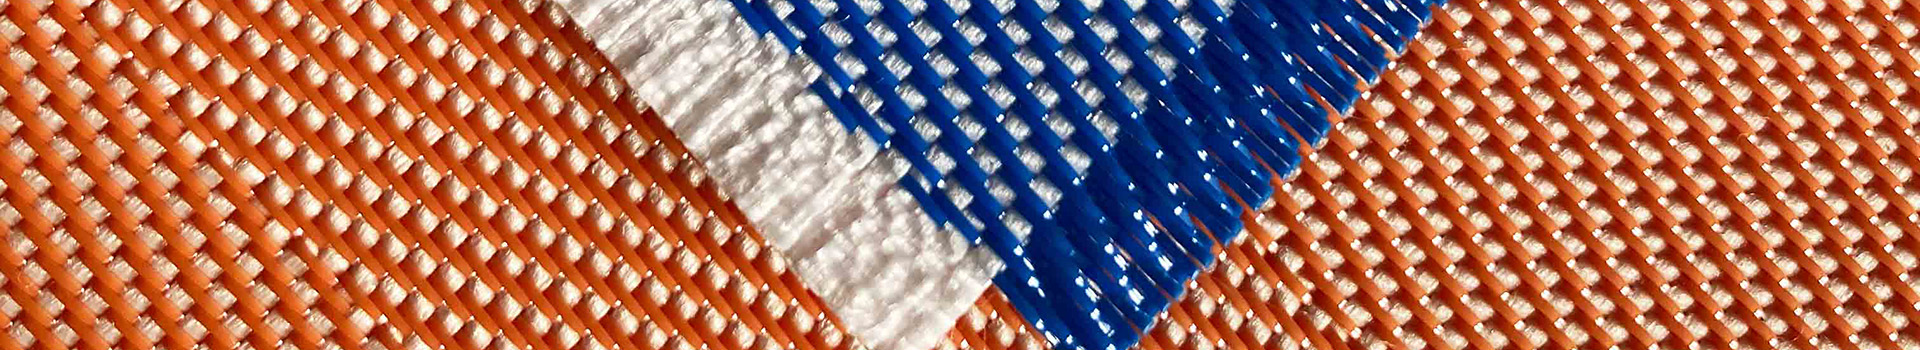 Polyester Vacuum Filter Belts